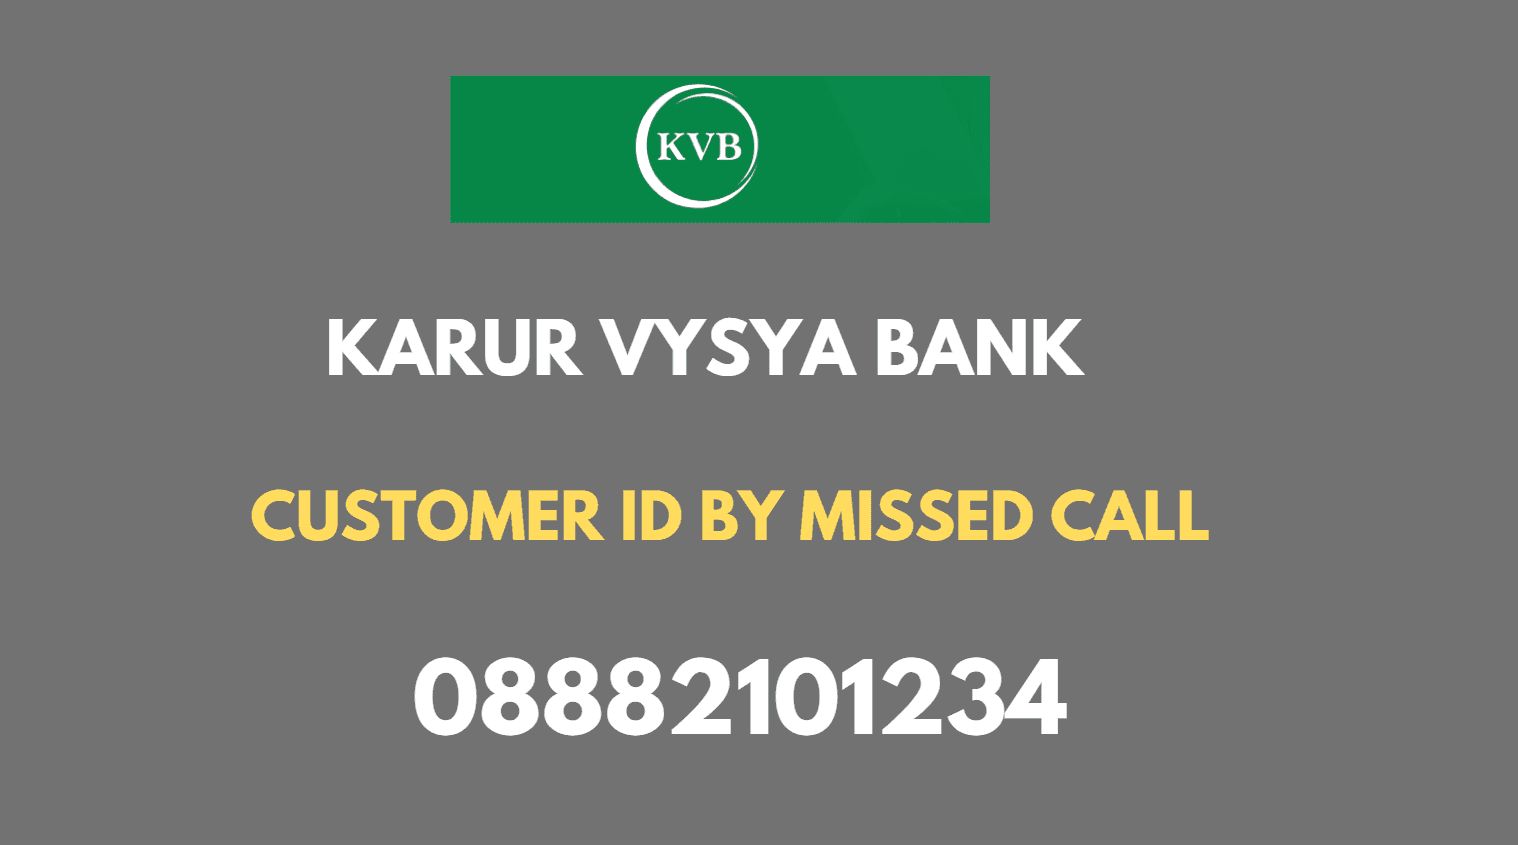 kvb customer id by missed call